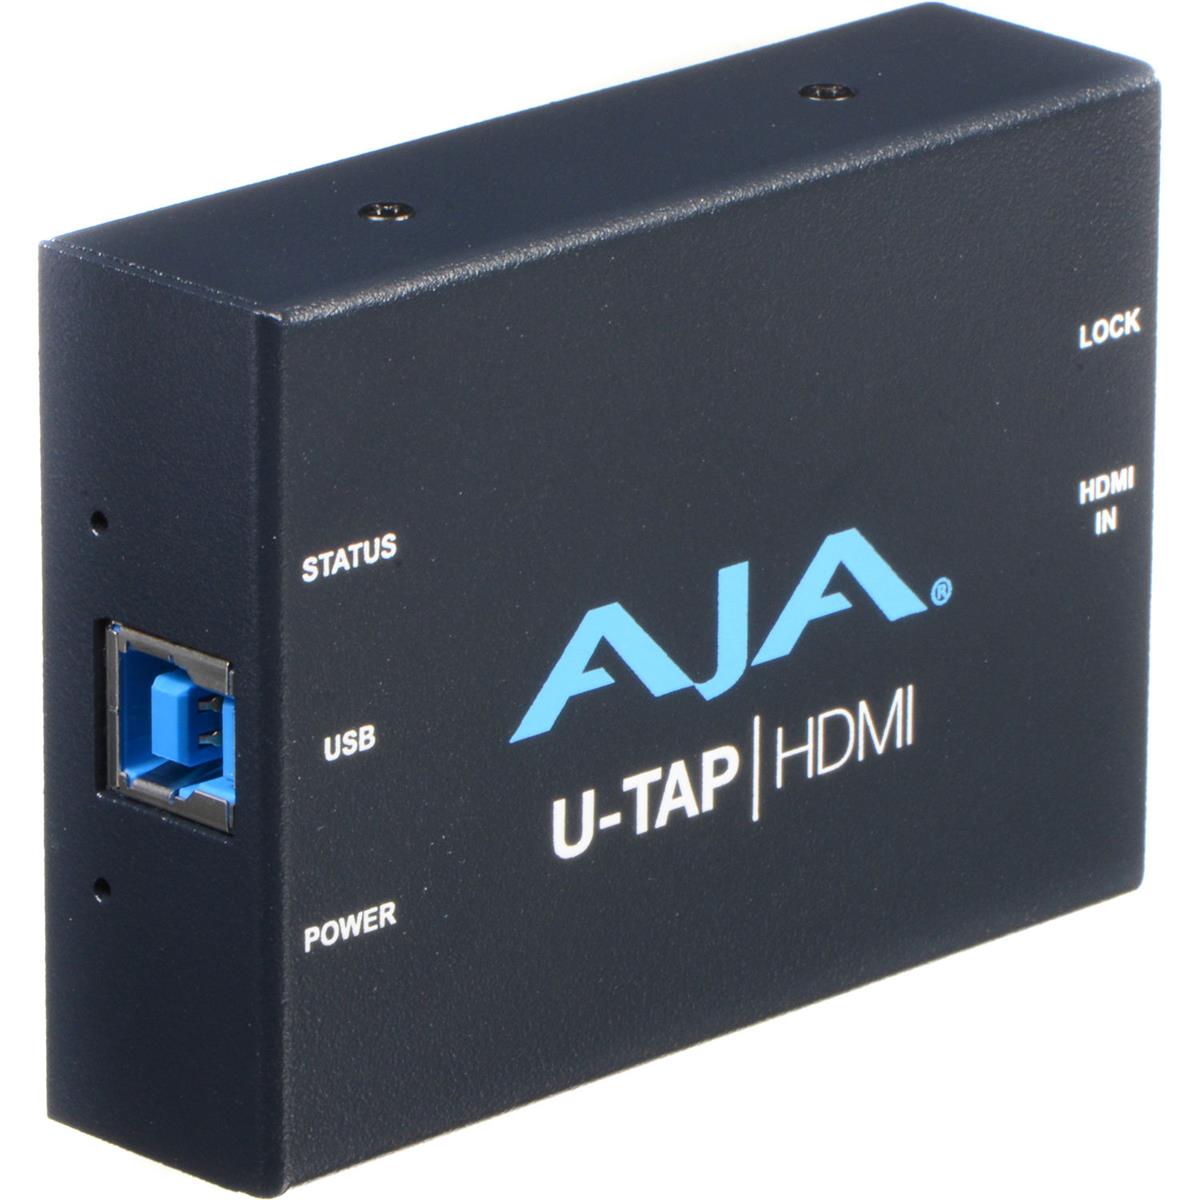 Image of AJA U-TAP HDMI Simple USB 3.0 Powered HDMI Capture